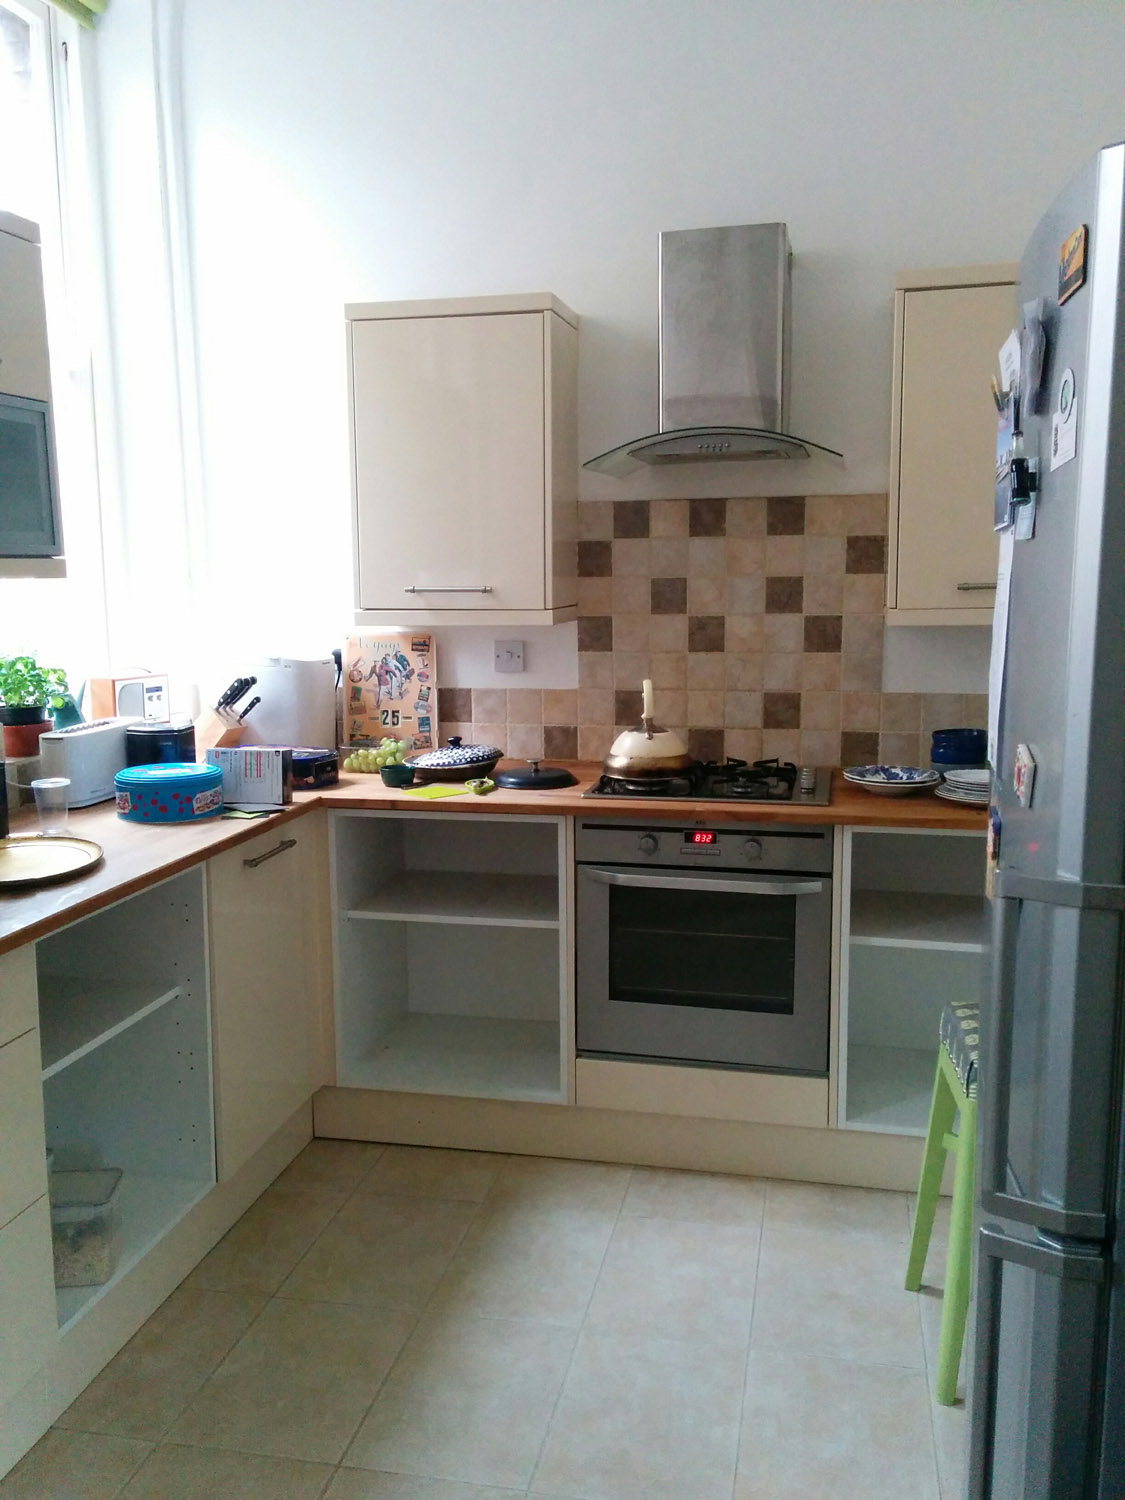 Kitchen - before renovation